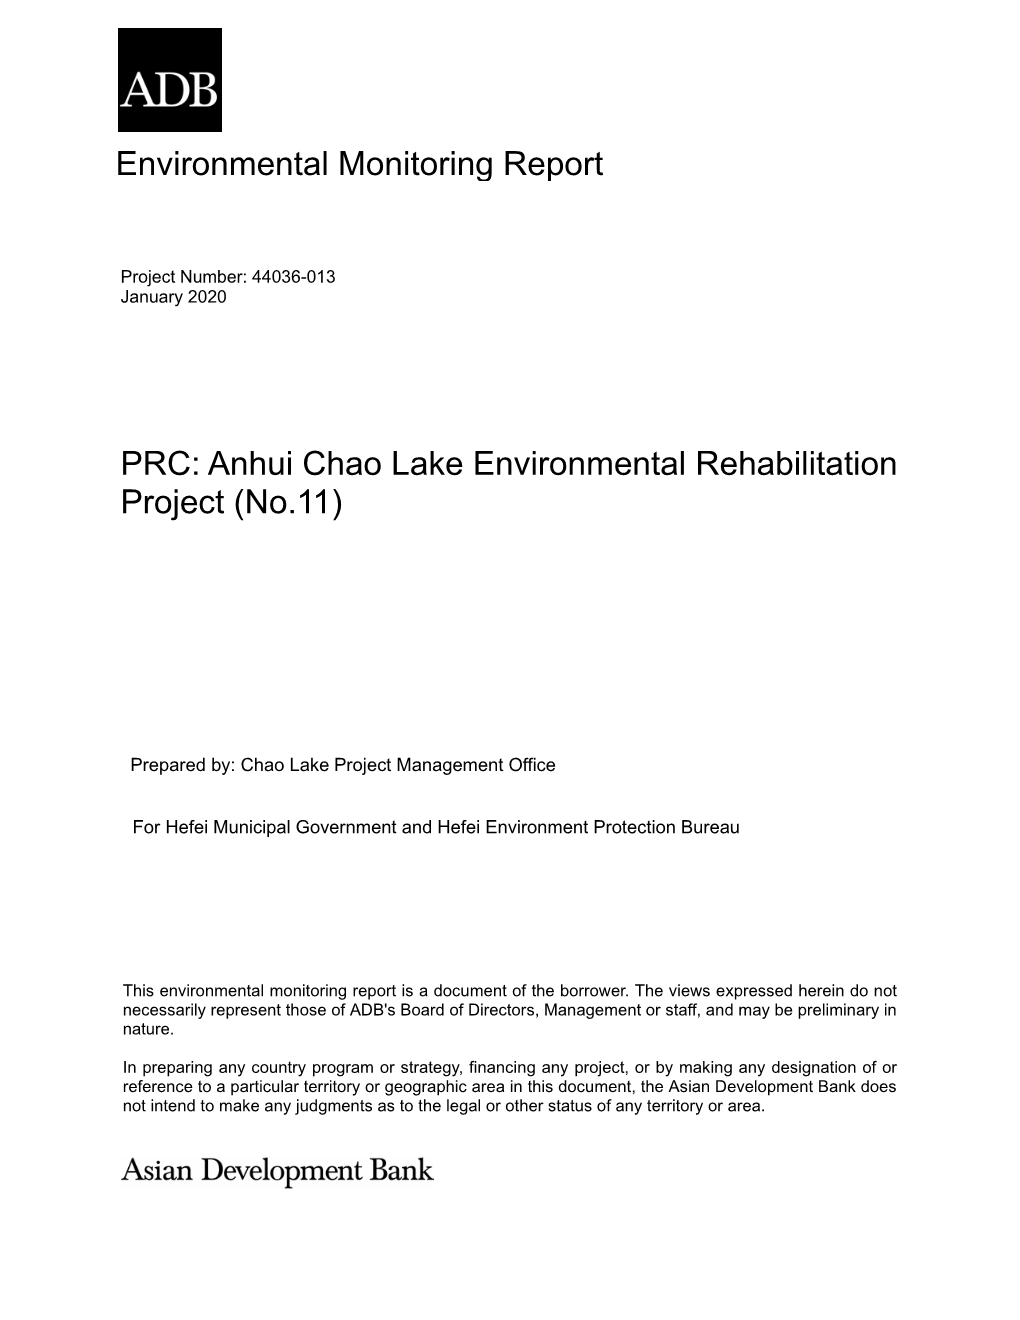 Anhui Chao Lake Environmental Rehabilitation Project (No.11)